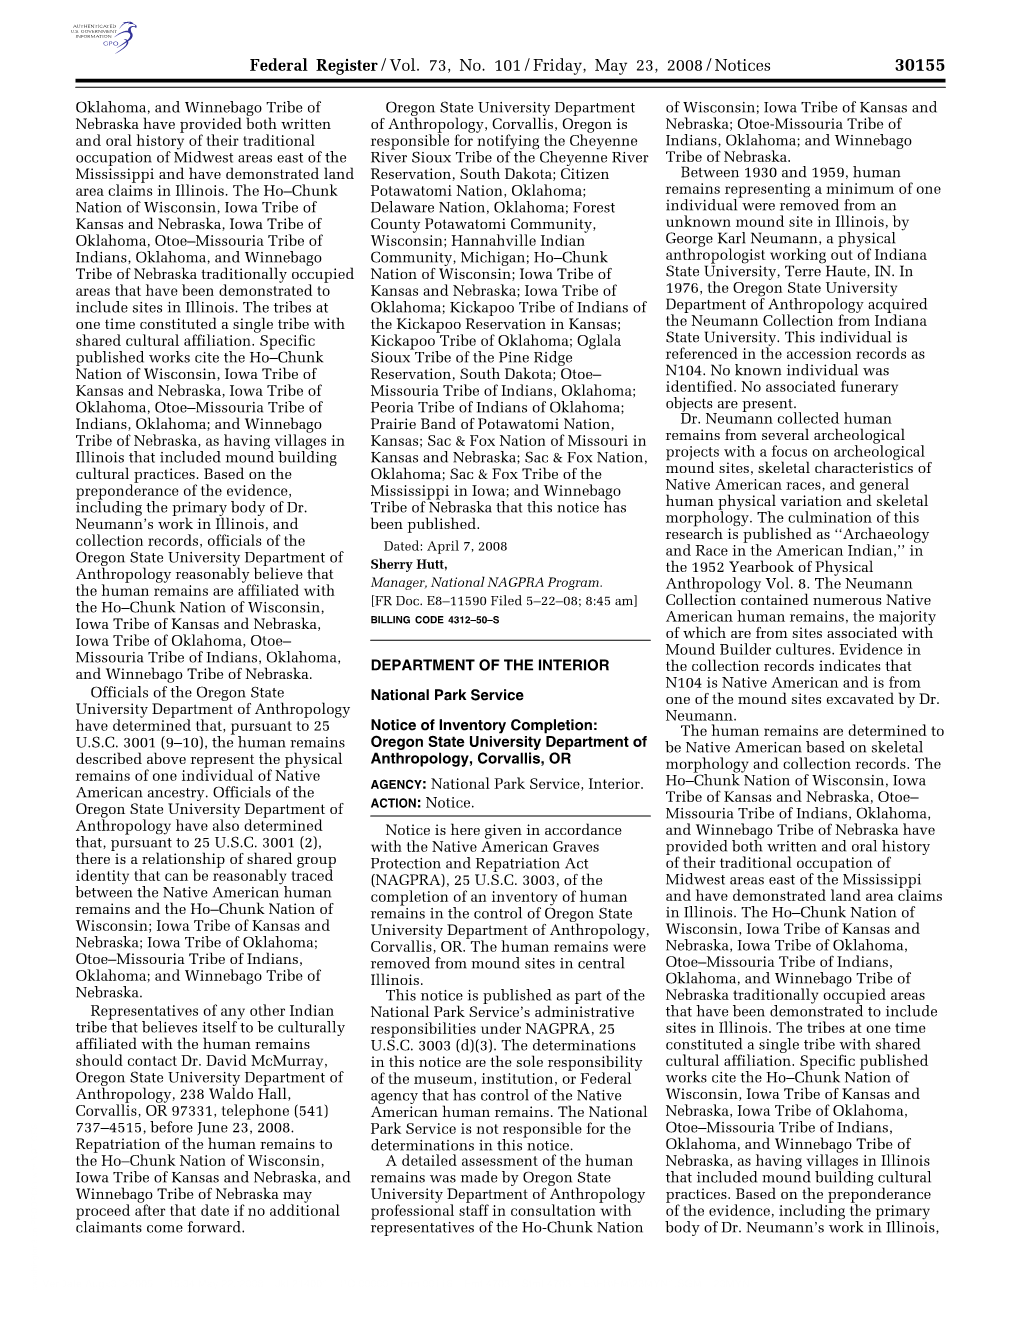 Federal Register/Vol. 73, No. 101/Friday, May 23, 2008/Notices